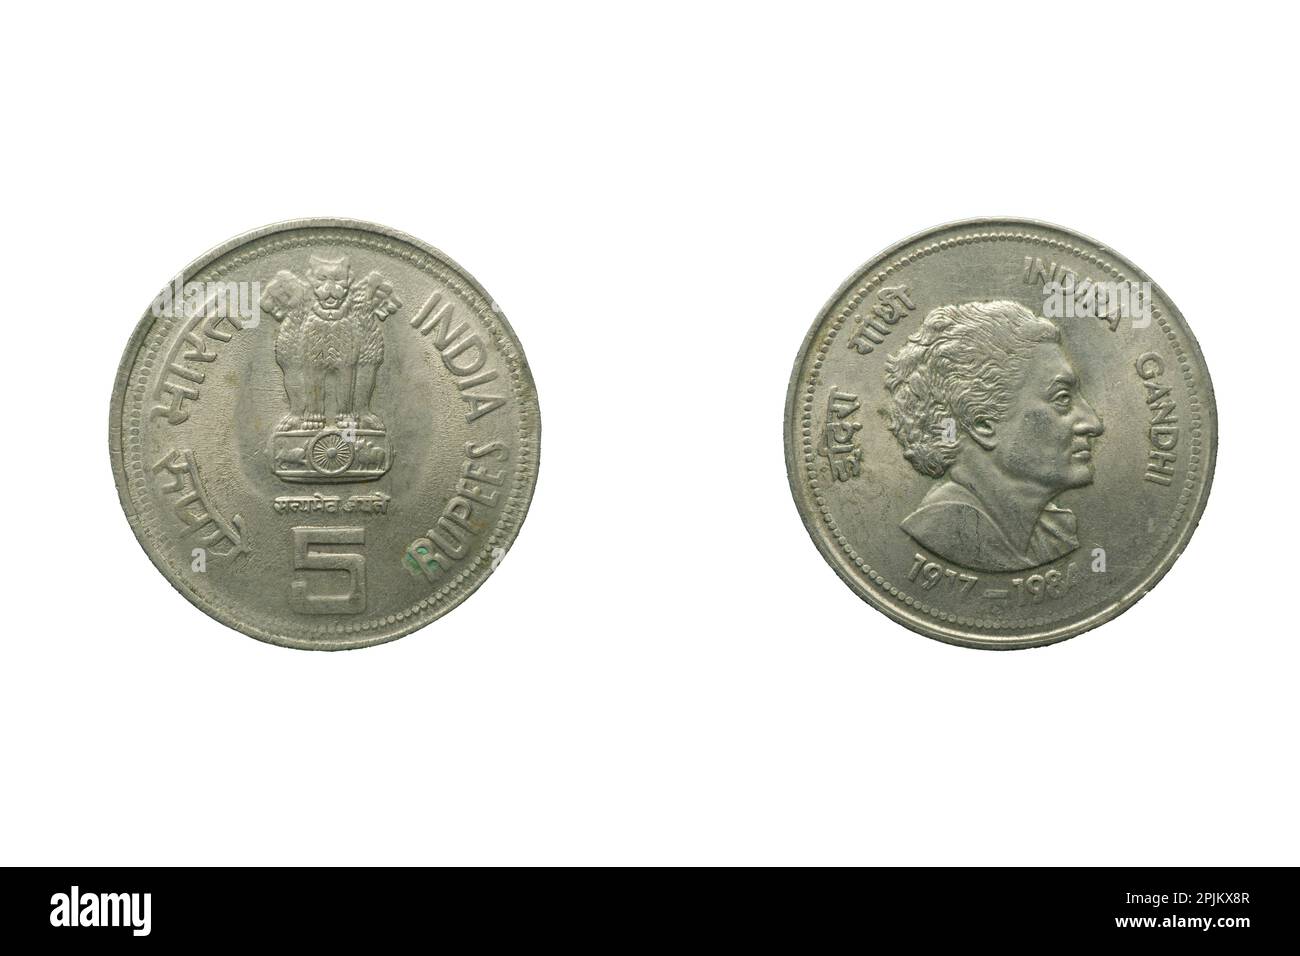 5 rupes coin behind indira gandhi Stock Photo